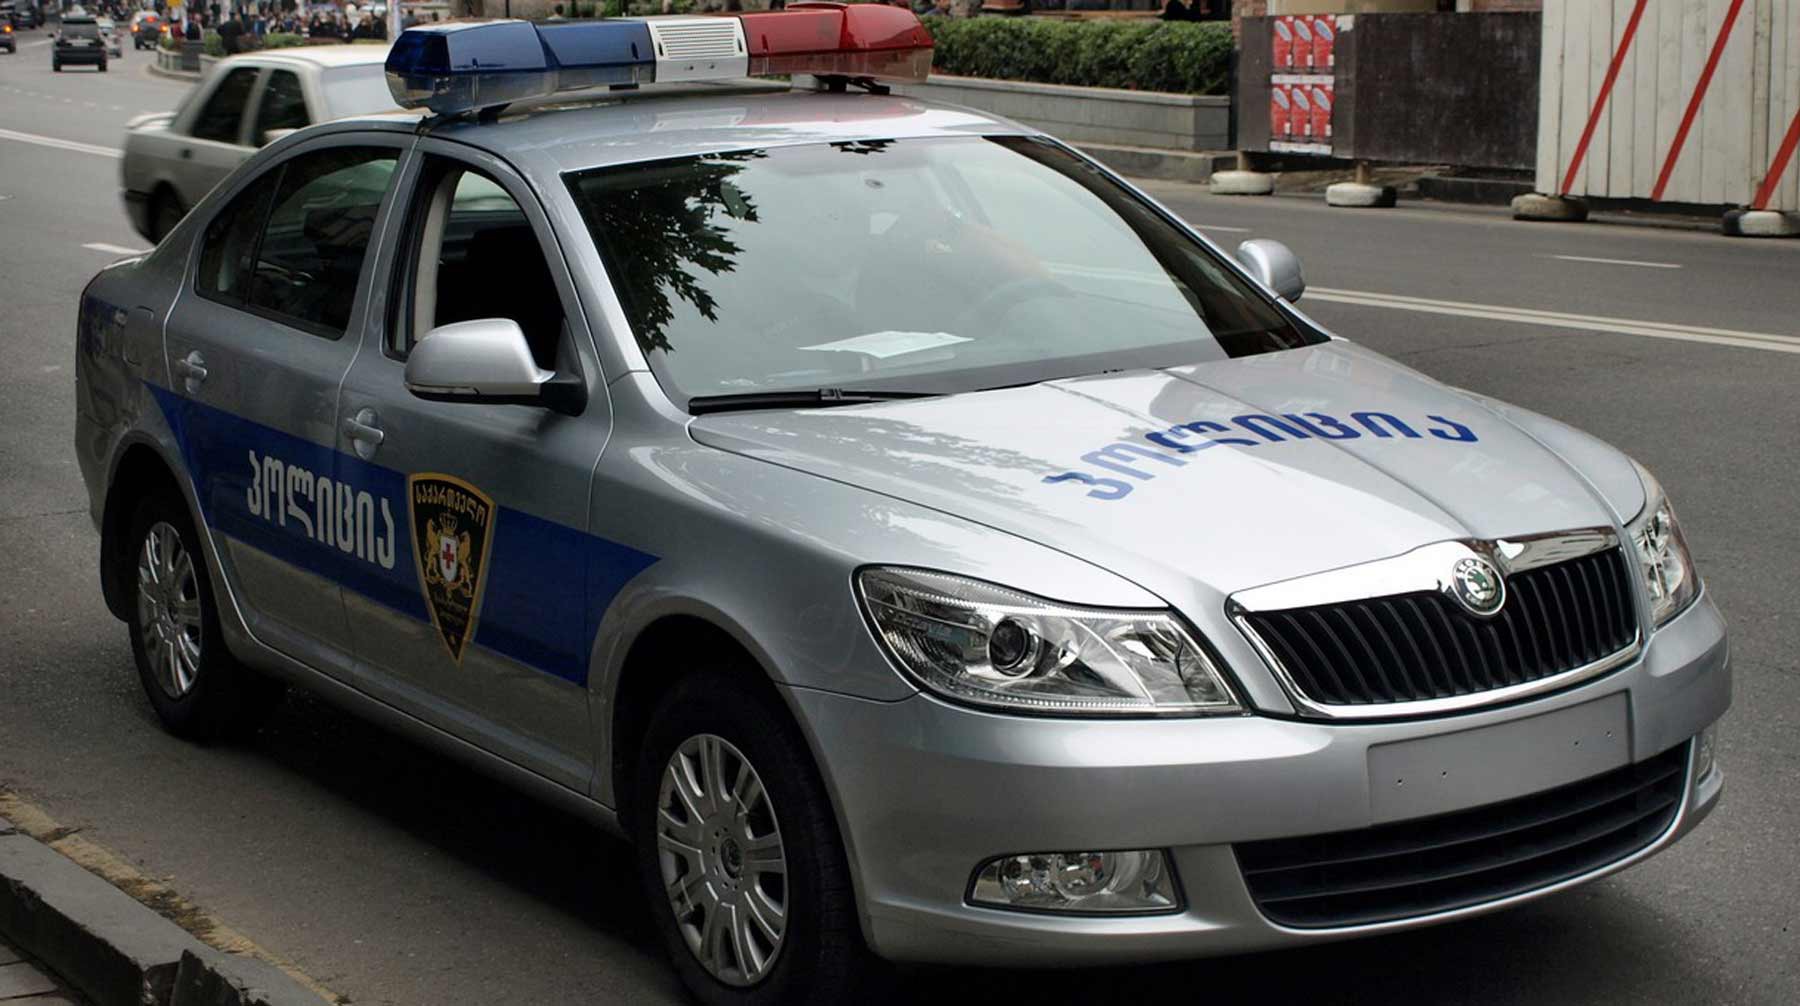 Dailystorm - Преступник с гранатами взял около 10 человек в заложники в здании банка в Тбилиси